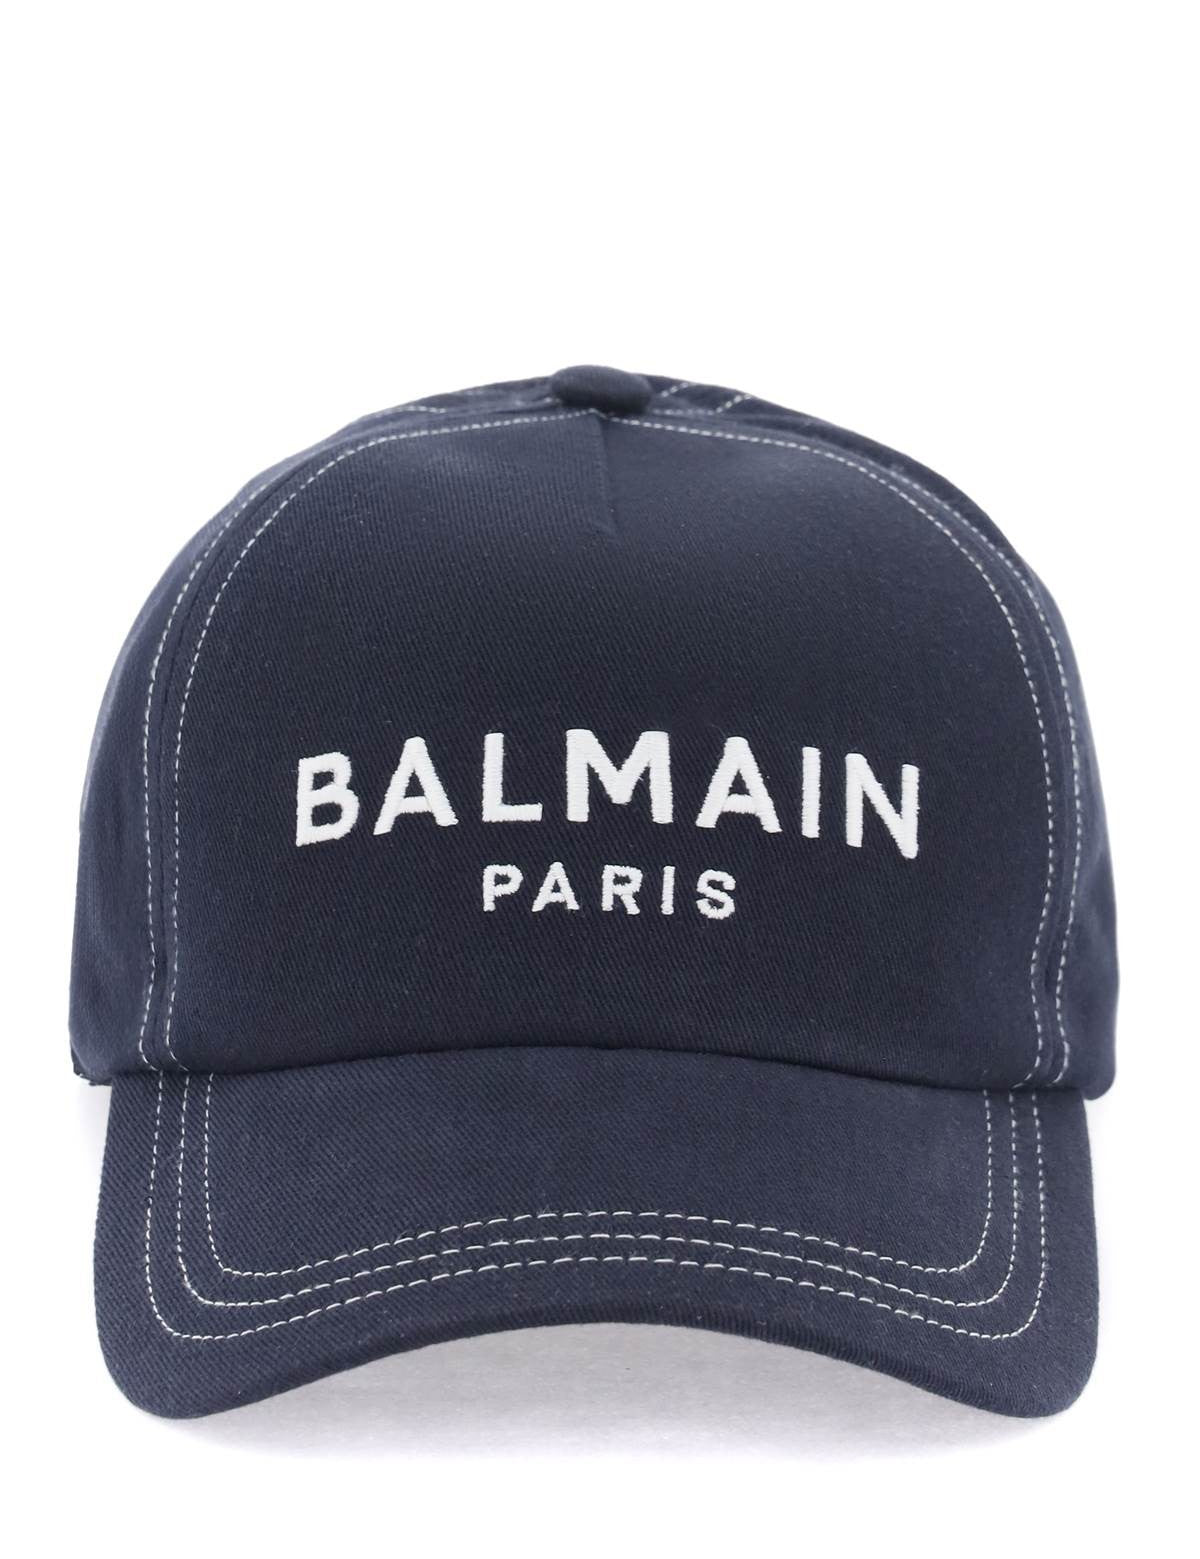 balmain-baseball-cap-with-logo.jpg